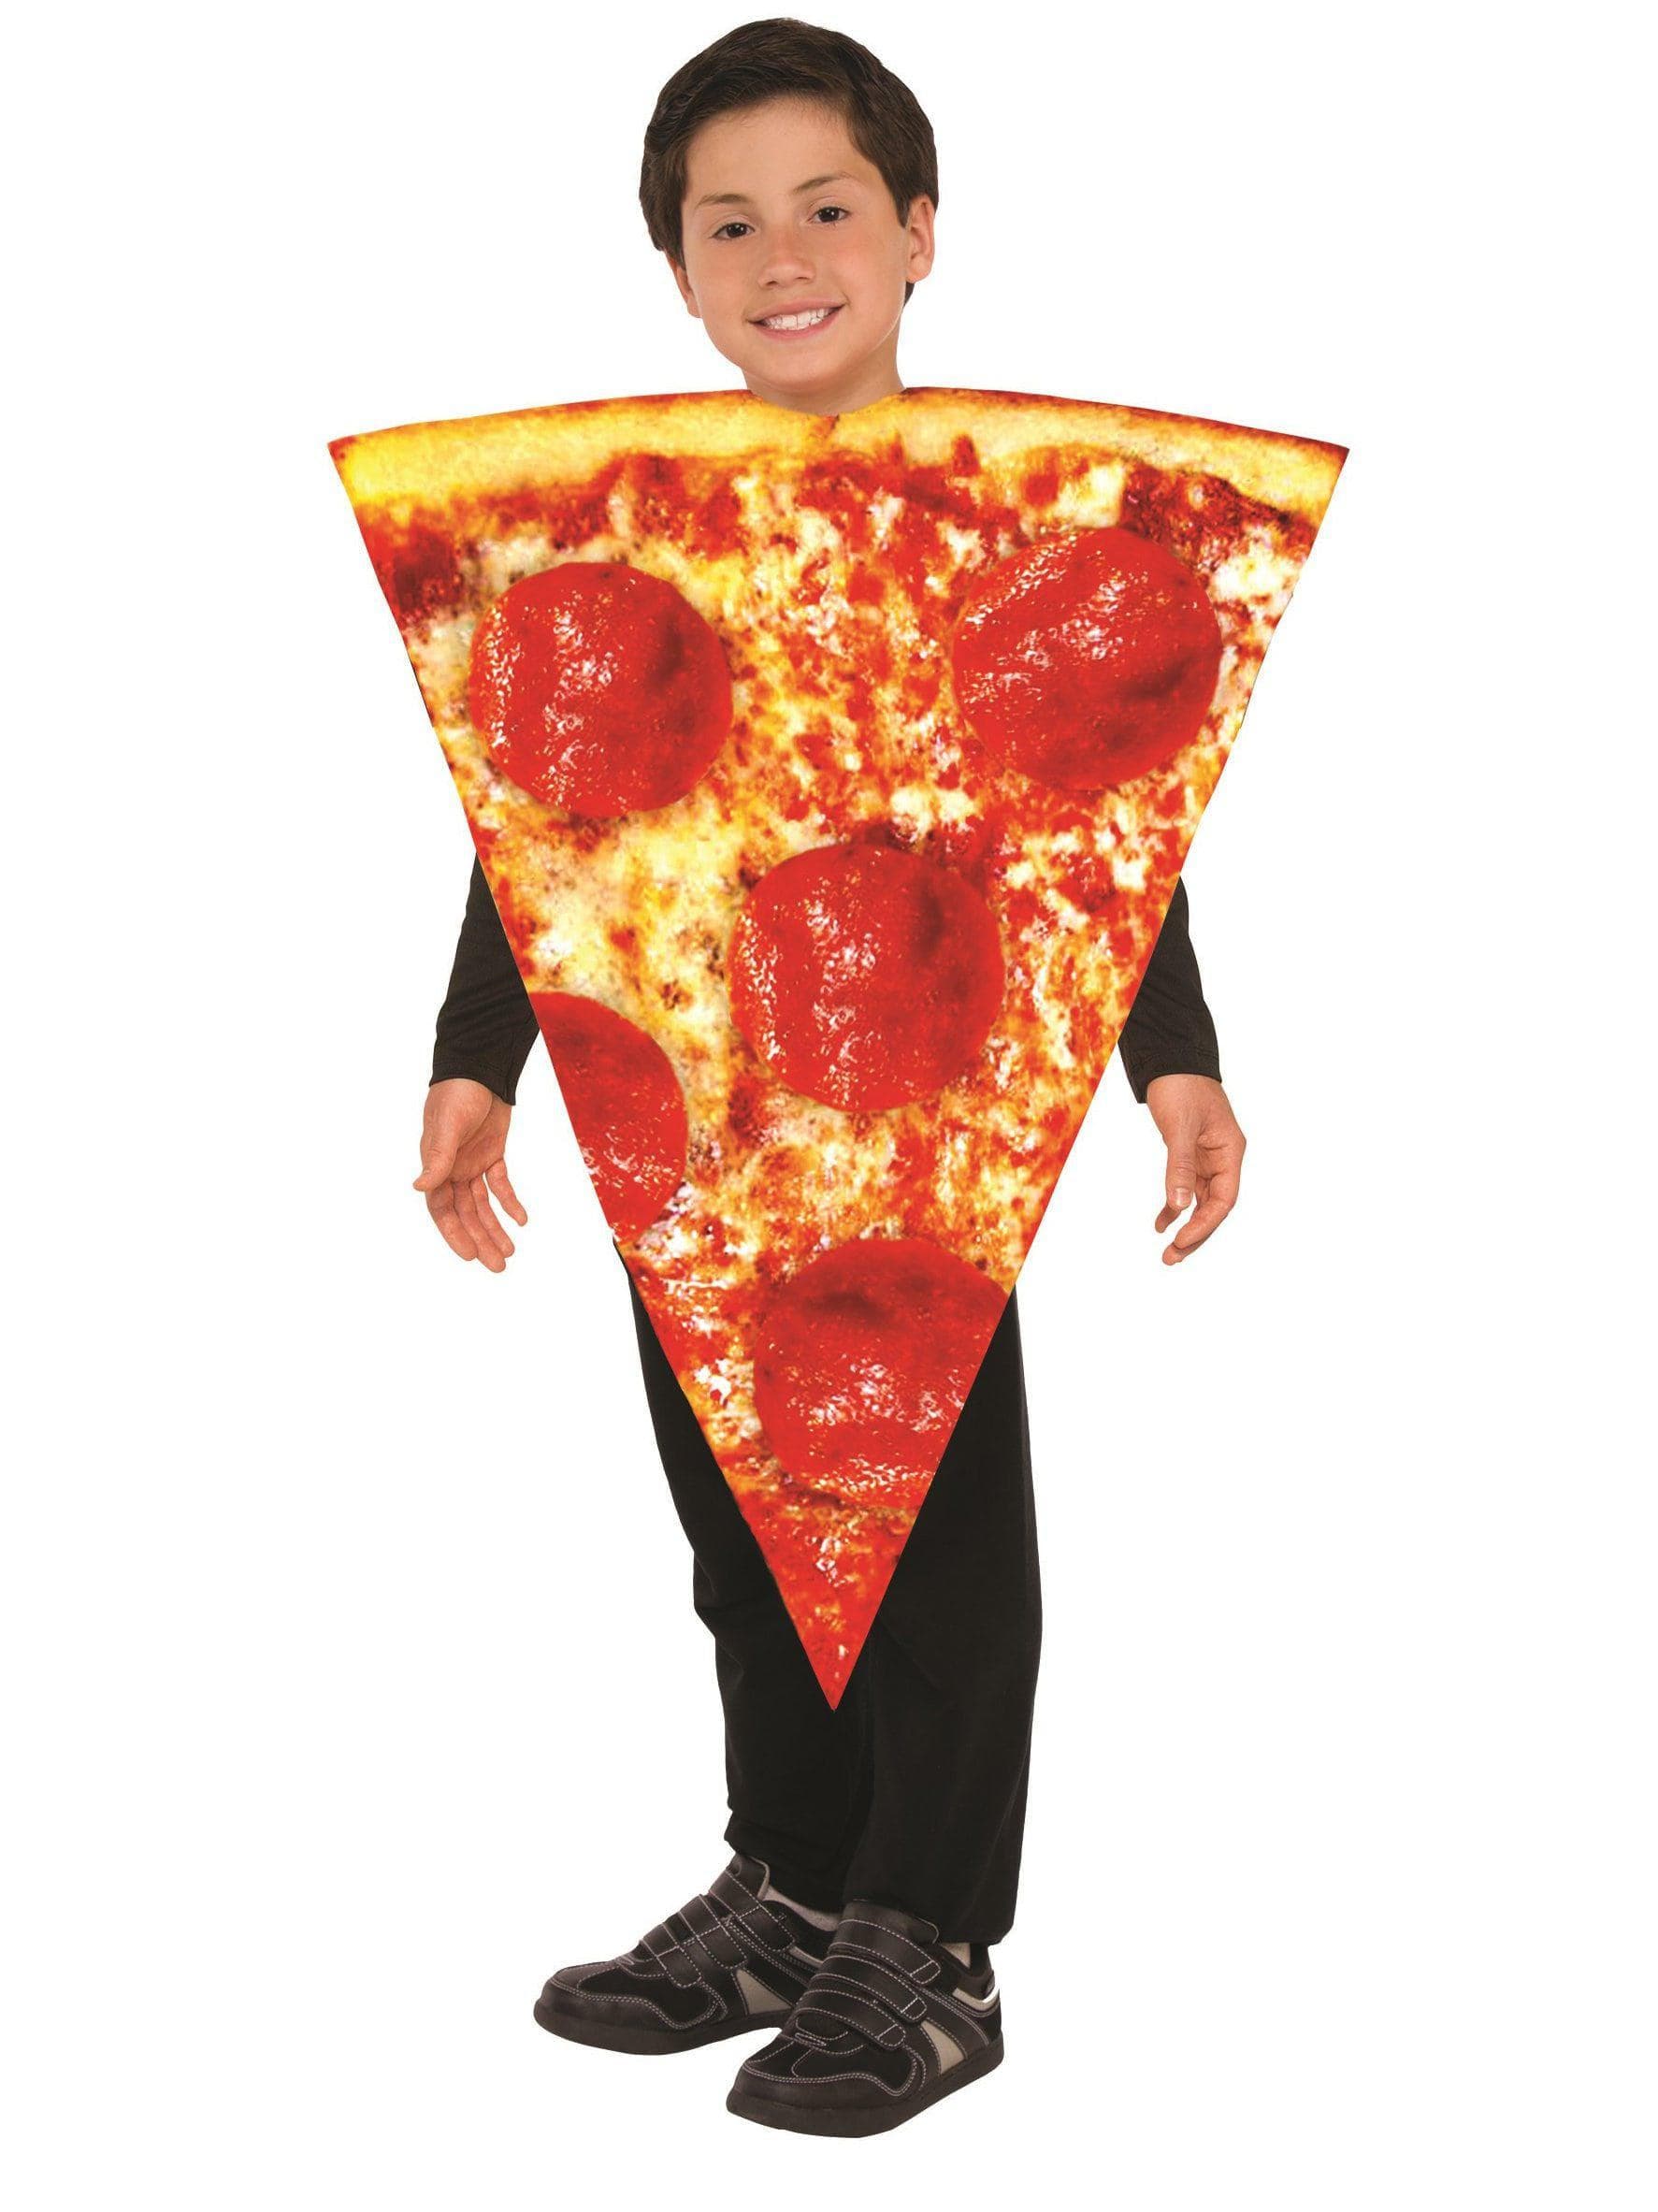 Kid's Pizza Costume - costumes.com